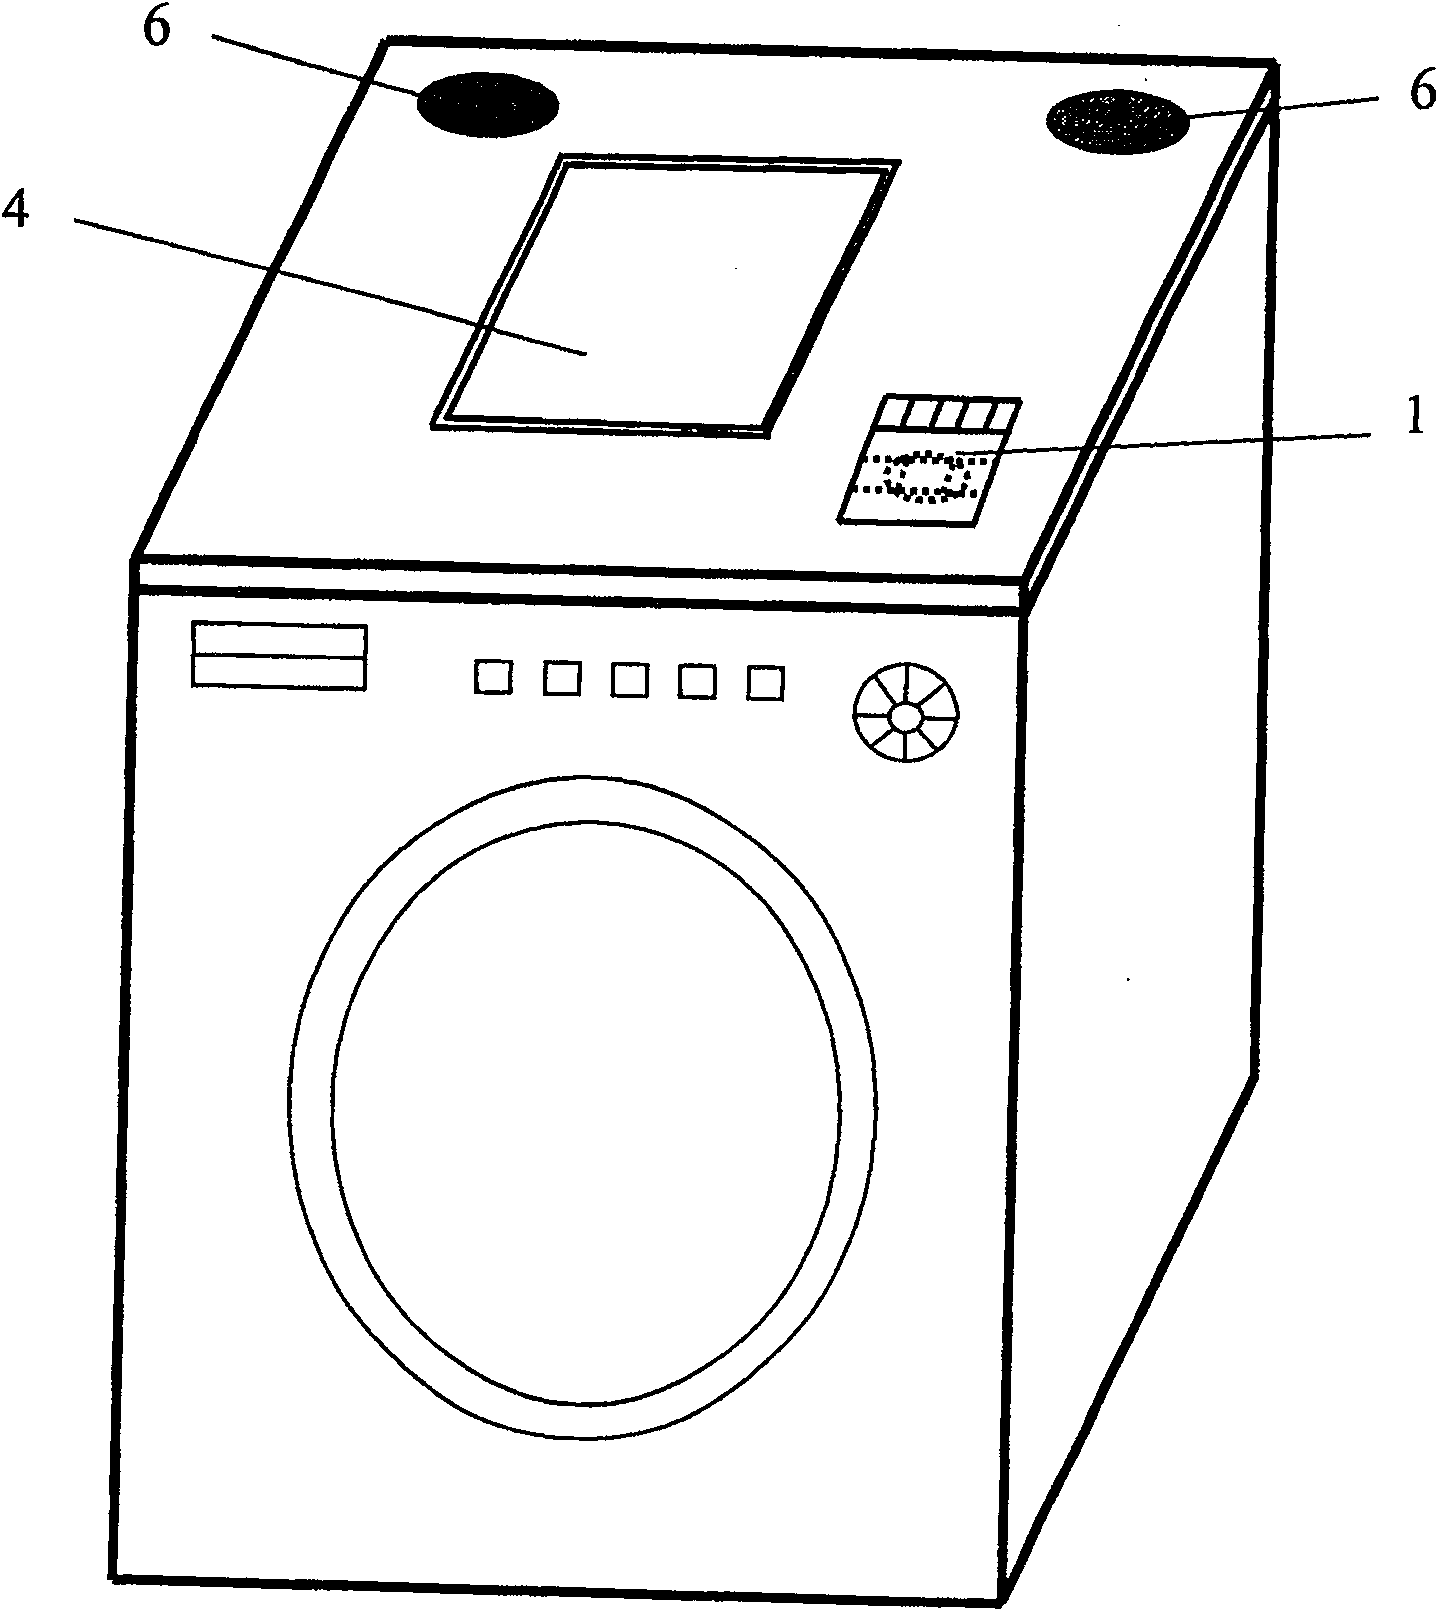 Multimedia device for self-service public washing machine